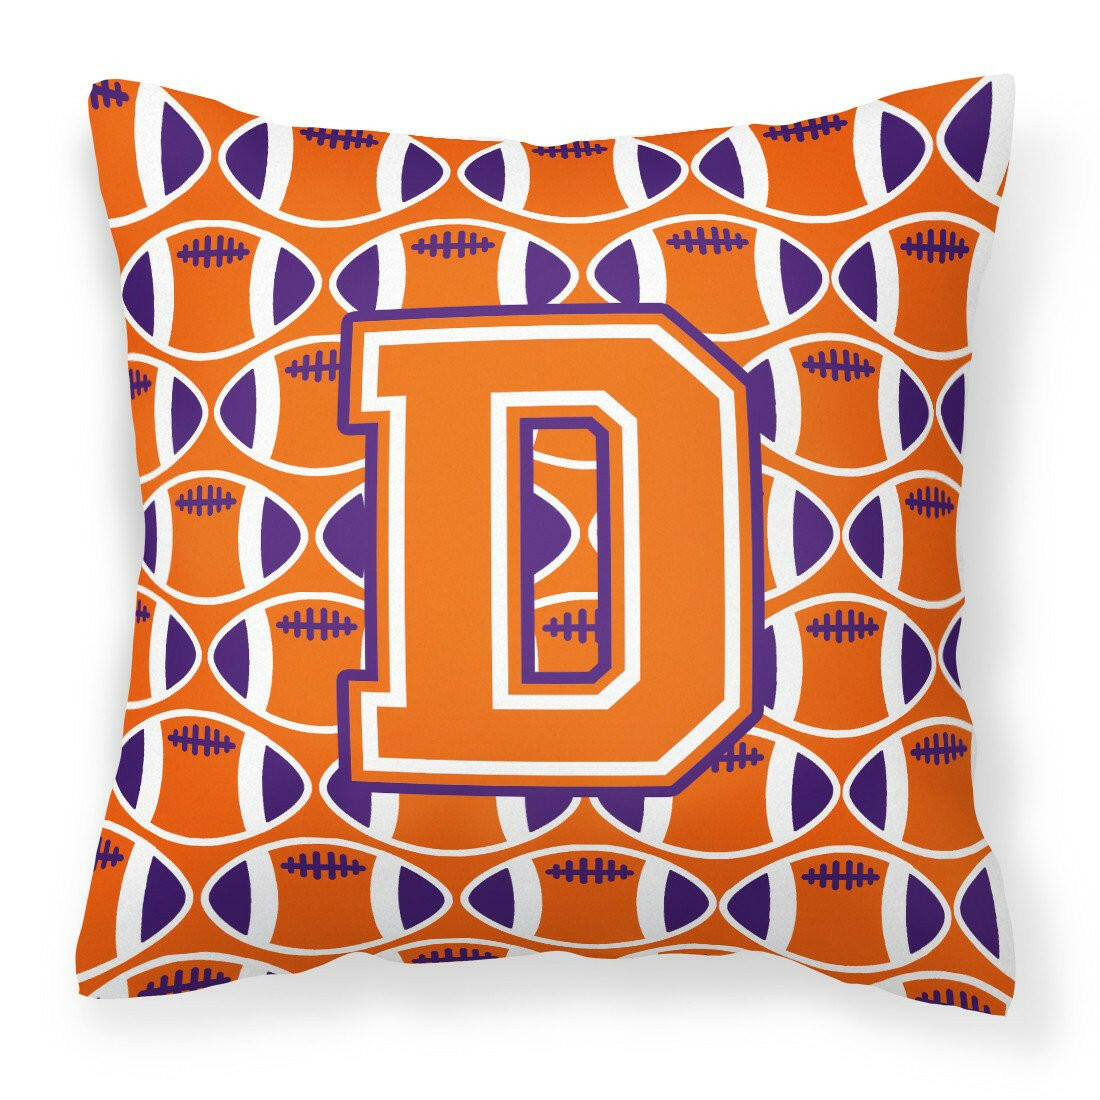 Letter D Football Orange, White and Regalia Fabric Decorative Pillow CJ1072-DPW1414 by Caroline's Treasures